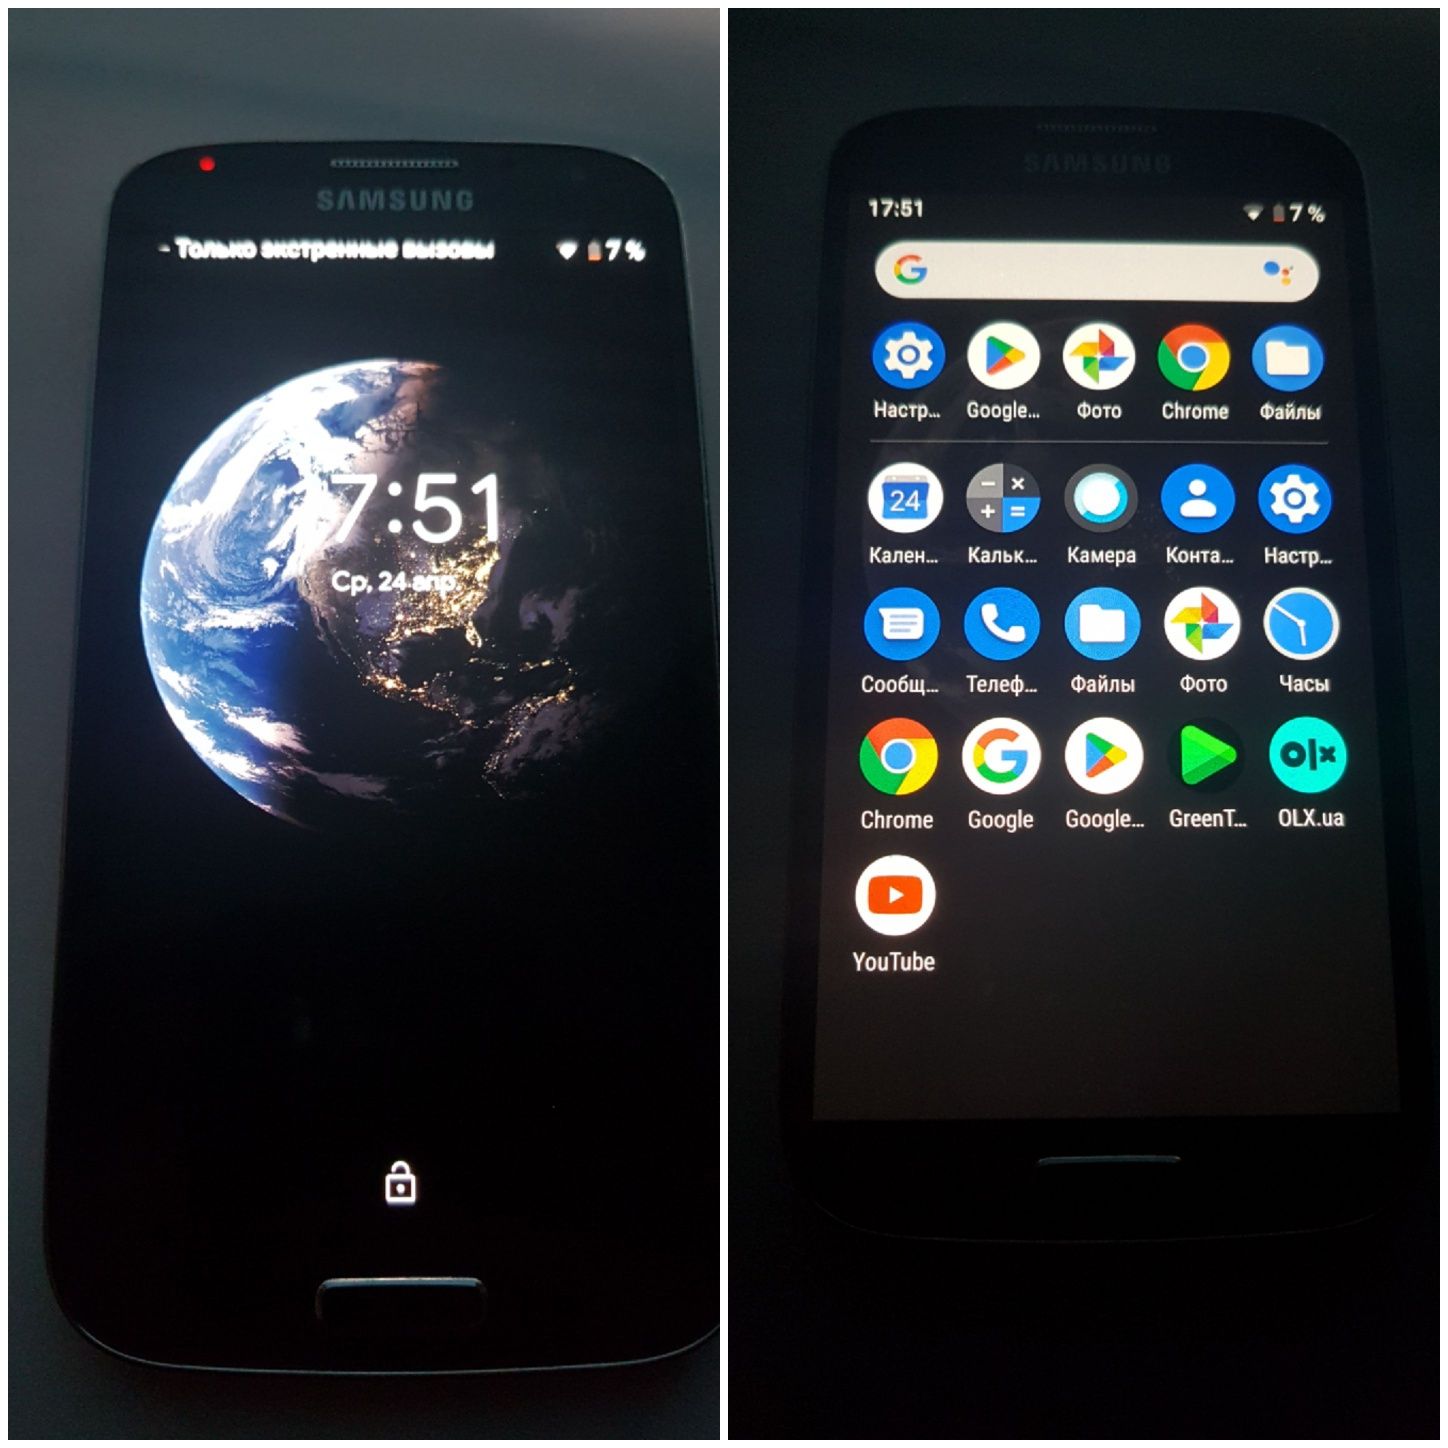 Samsung Galaxy S4 (Самсунг С4)